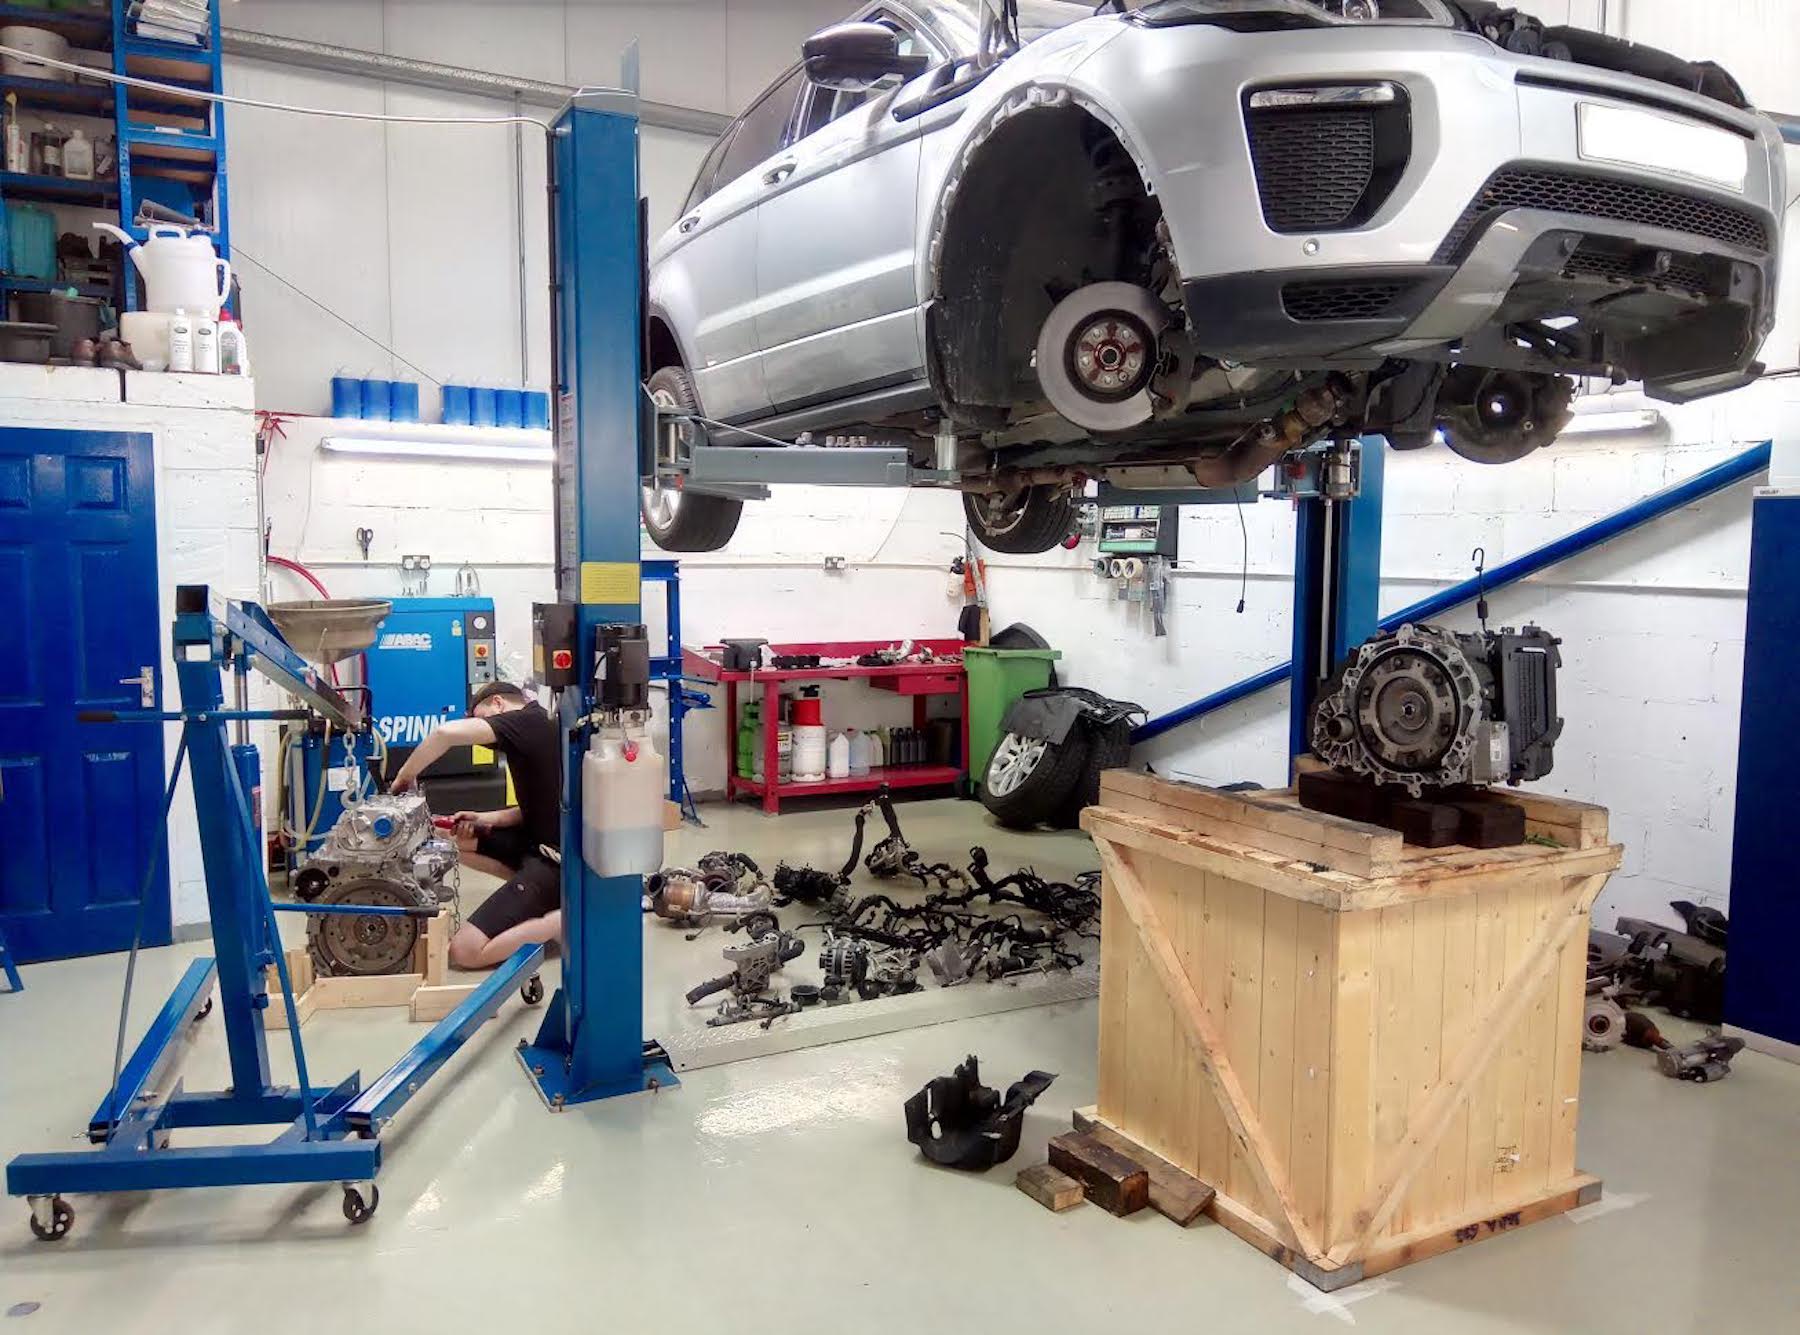 Engine replacement – Range Rover, Land Rover, Jaguar